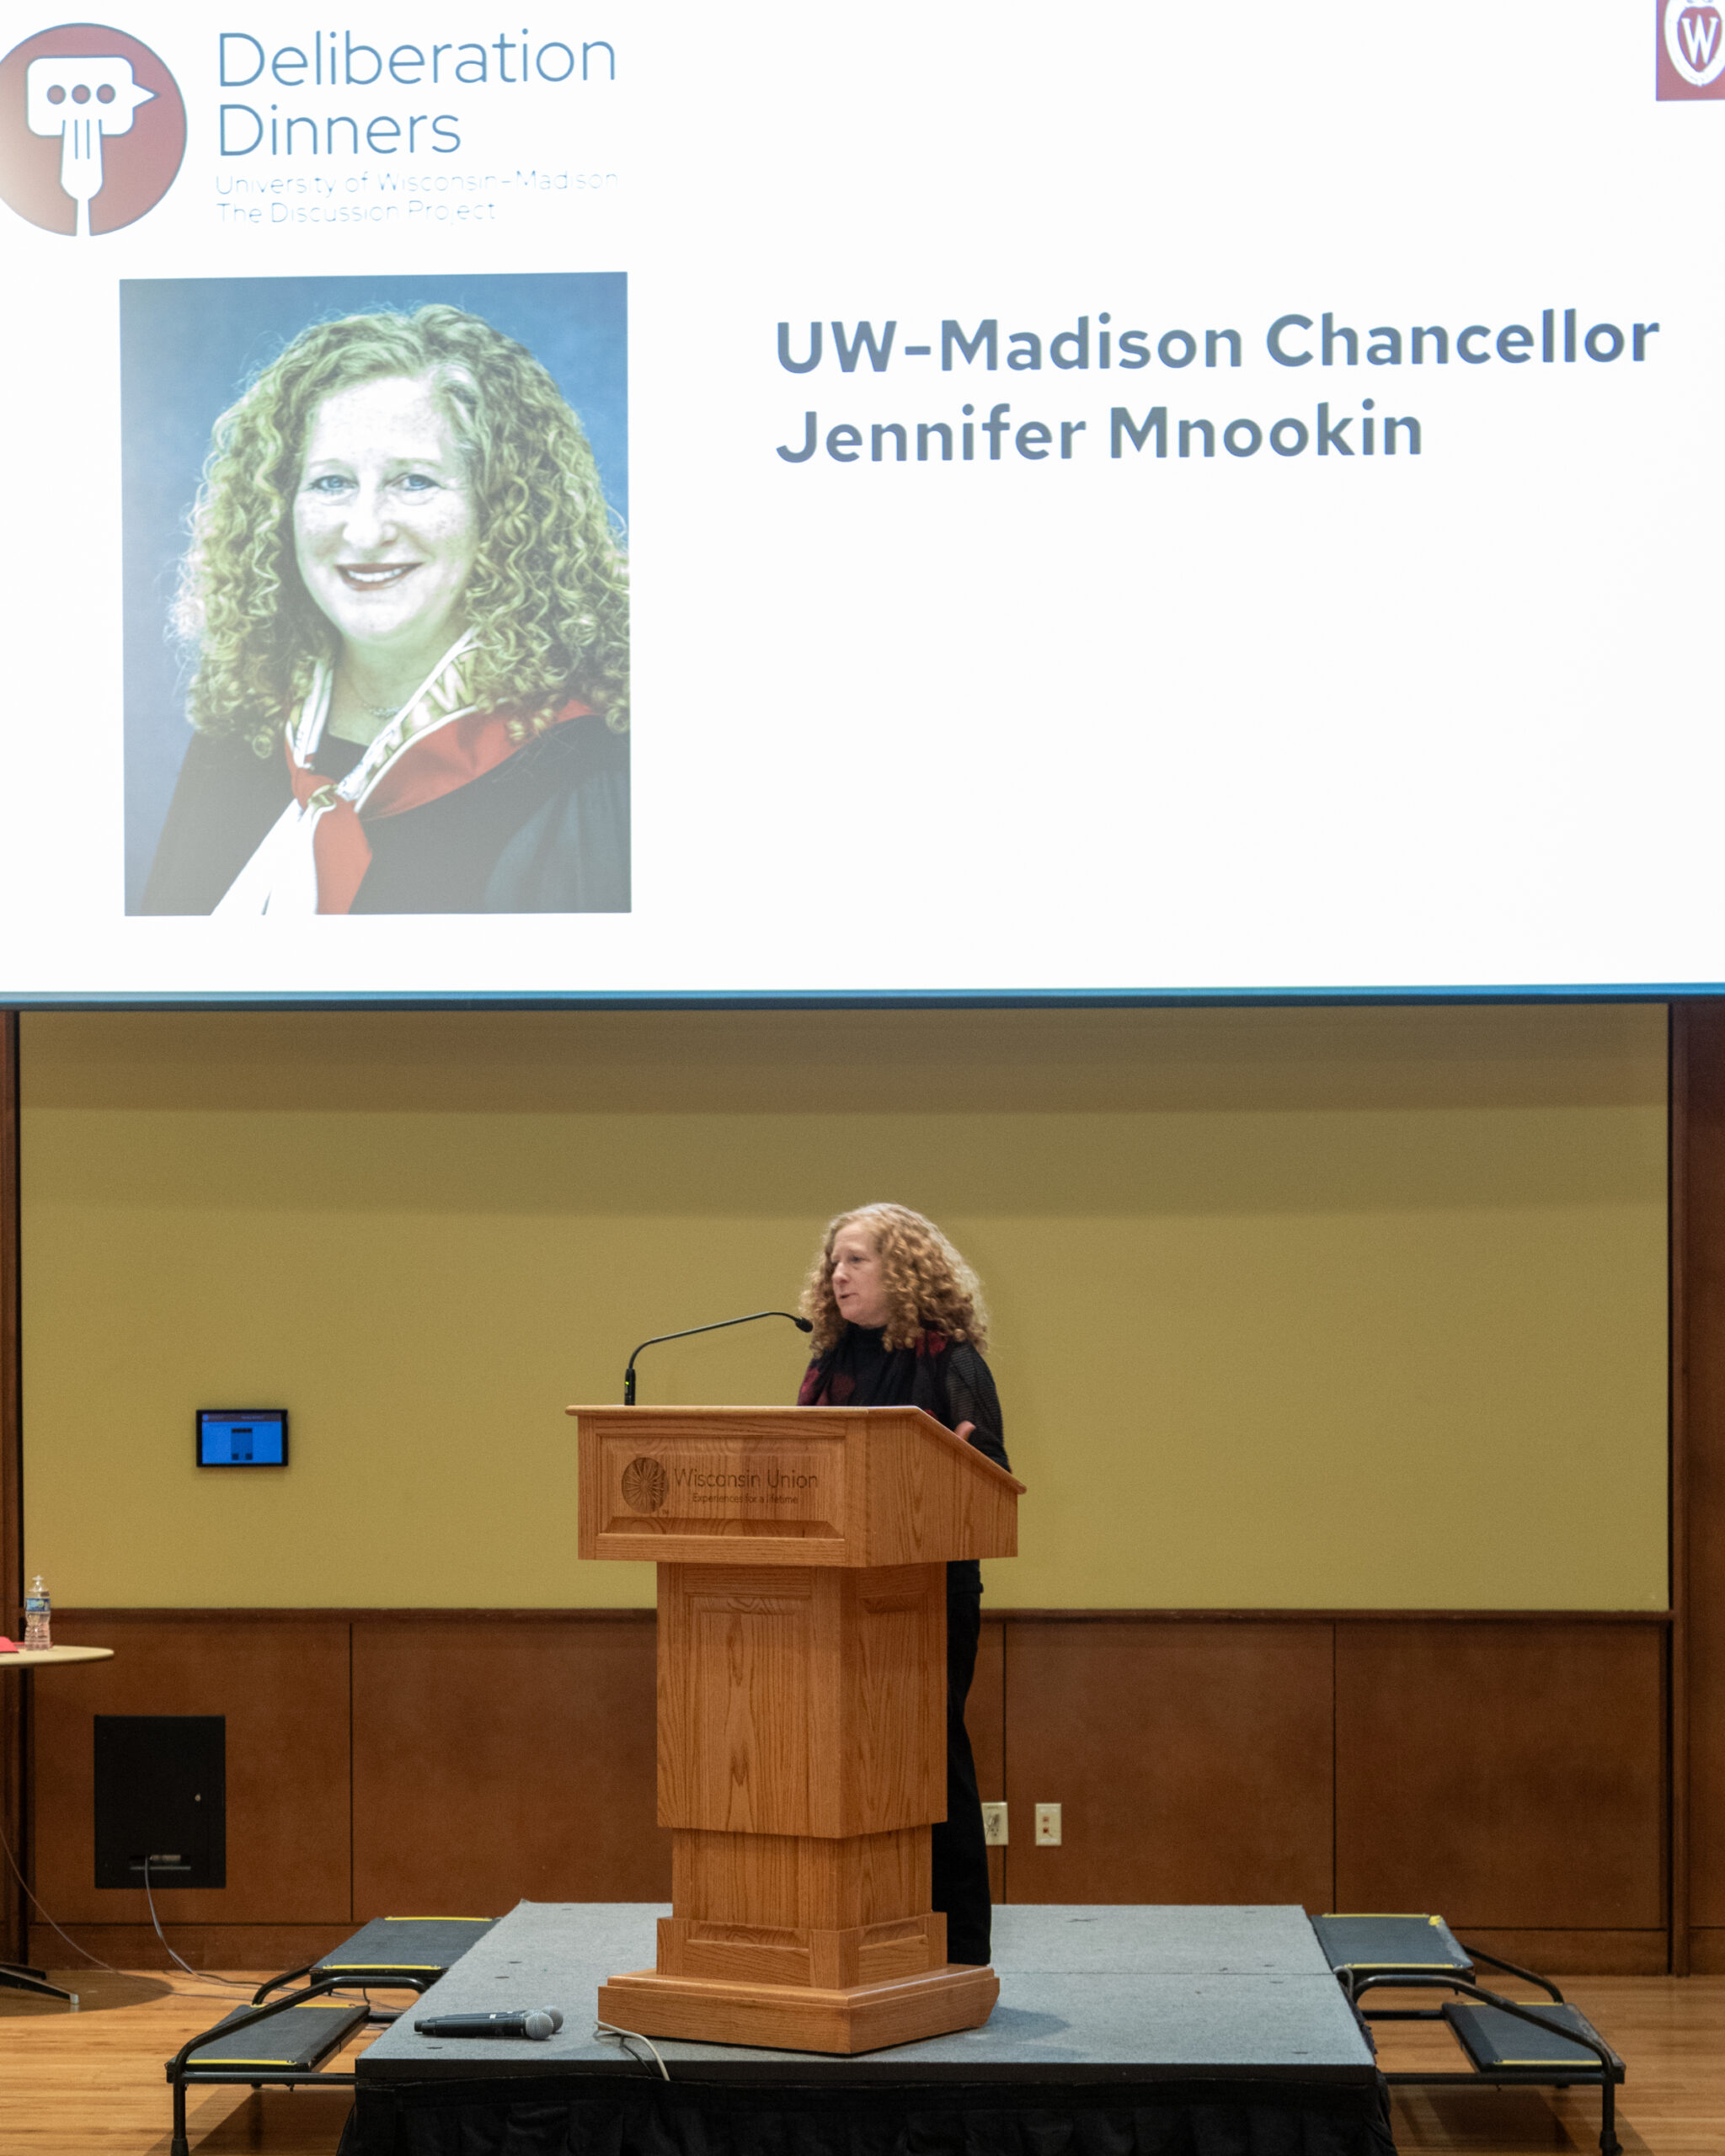 UW-Madison Chancellor Jennifer Mnookin at a podium on stage